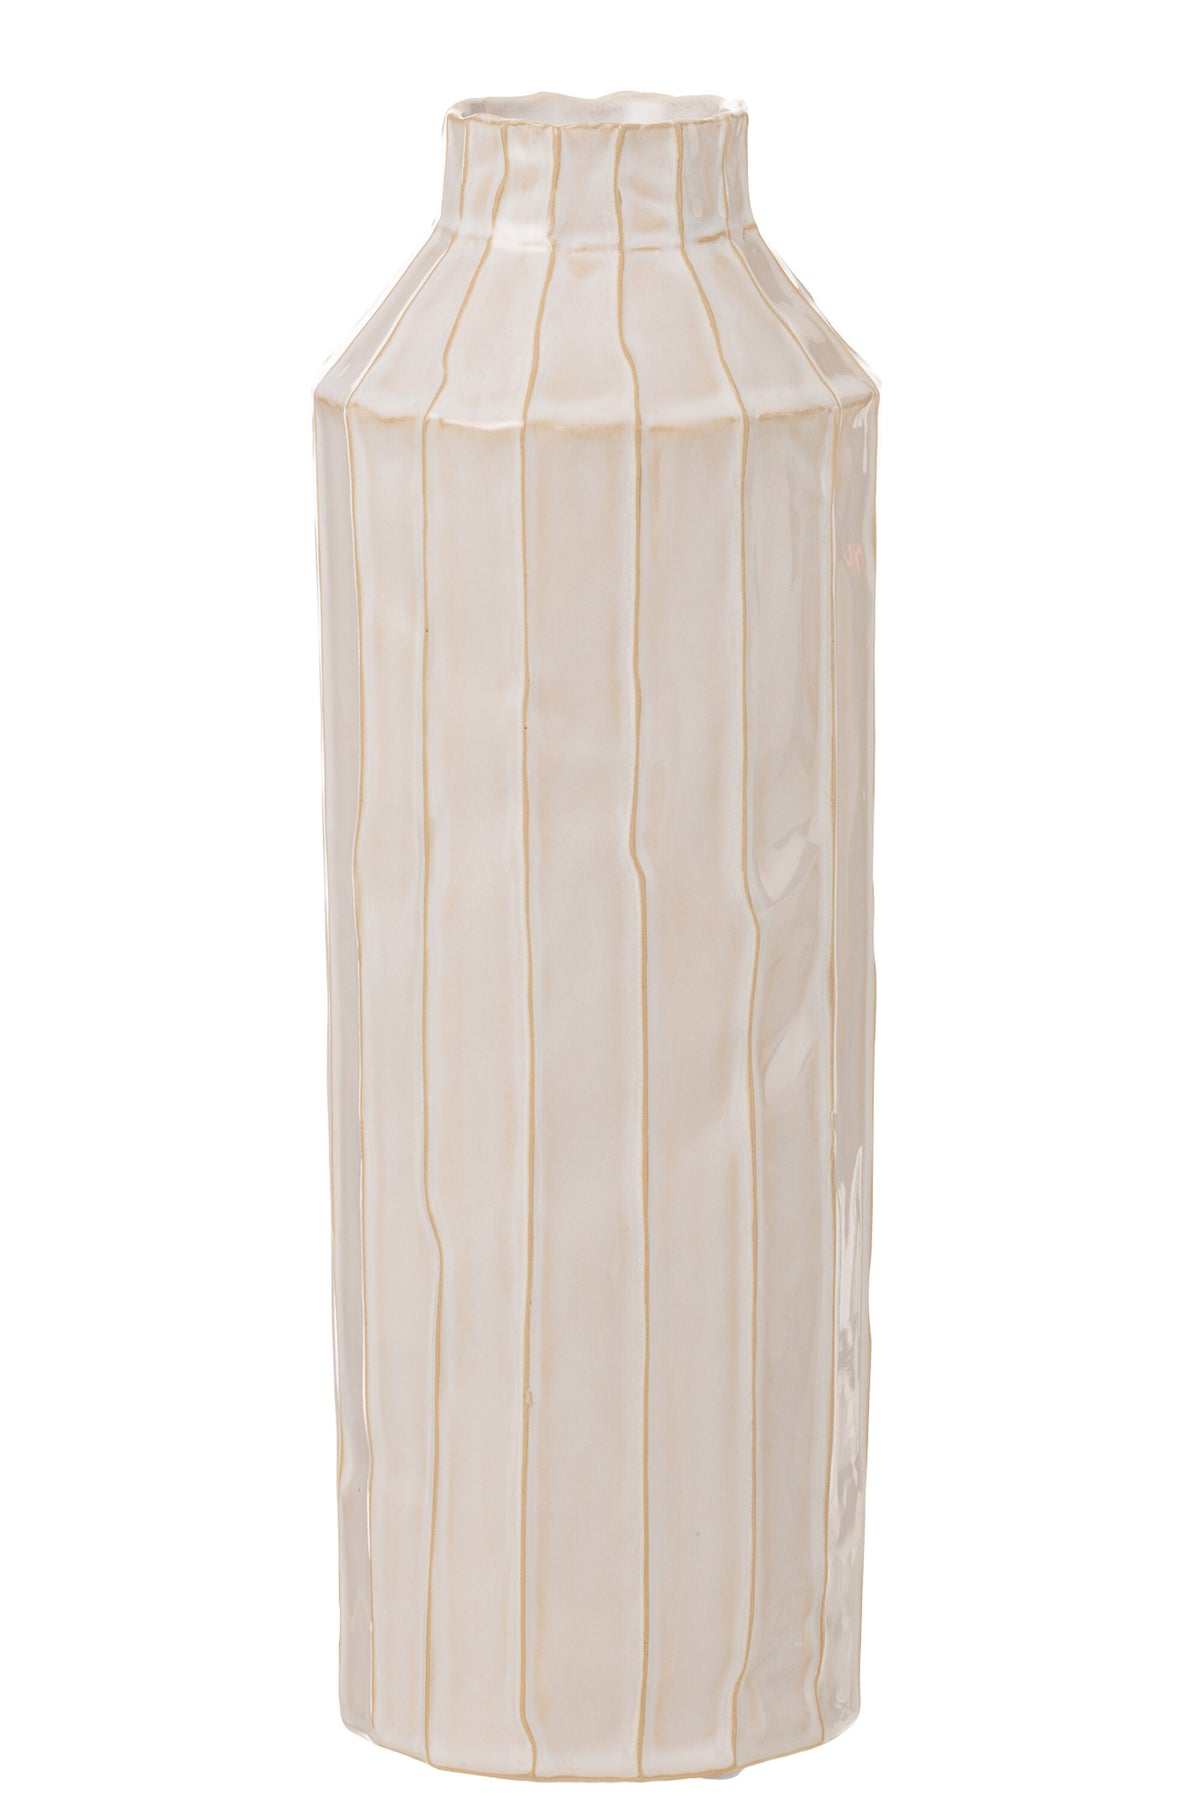 Vase Milk Bottle Ceramic White L